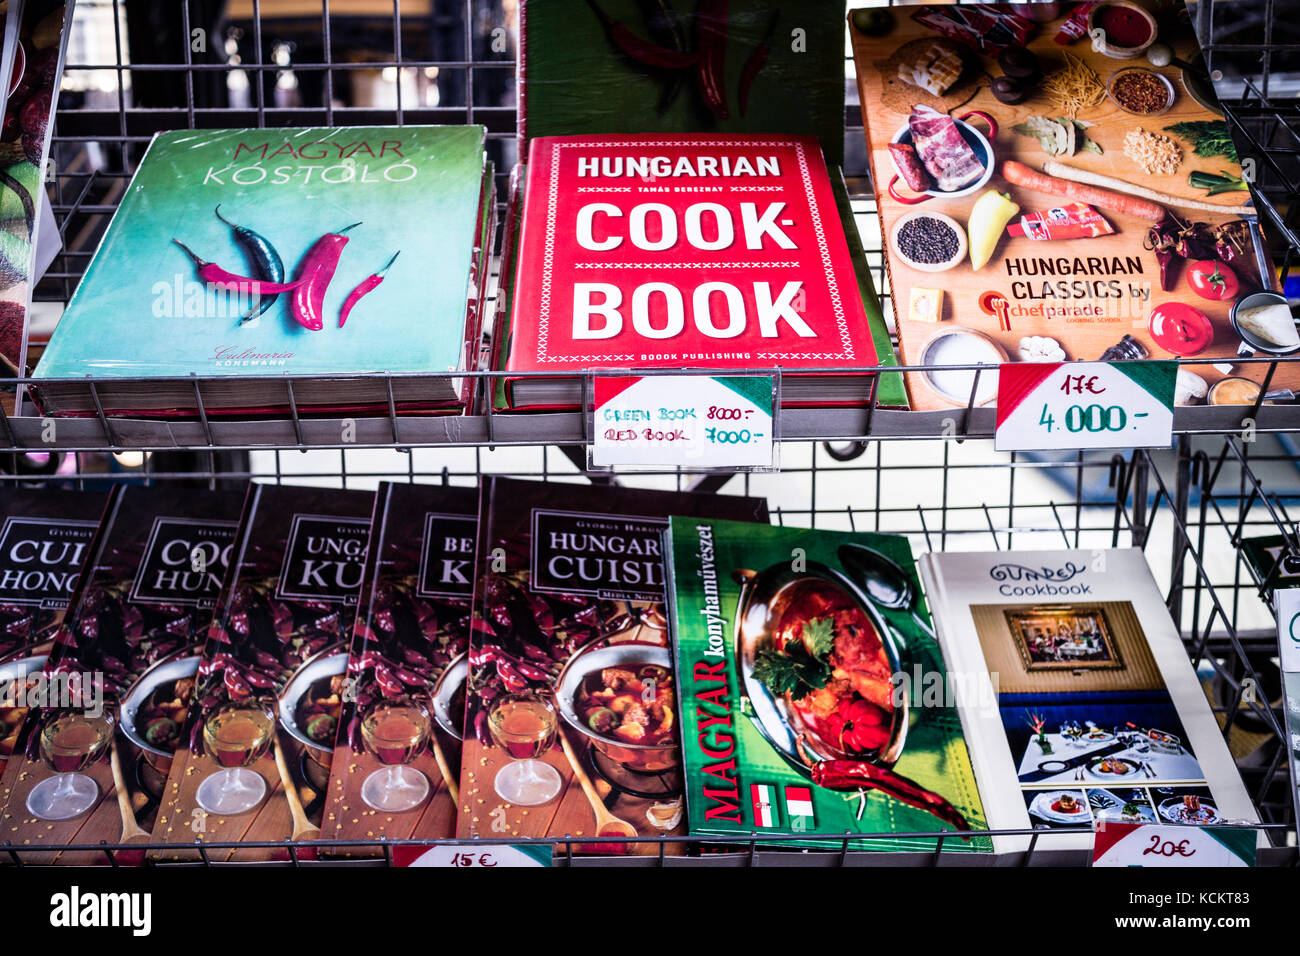 Bookshelf Display with Hungarian cookbooks, Budapest, Hungary Stock Photo